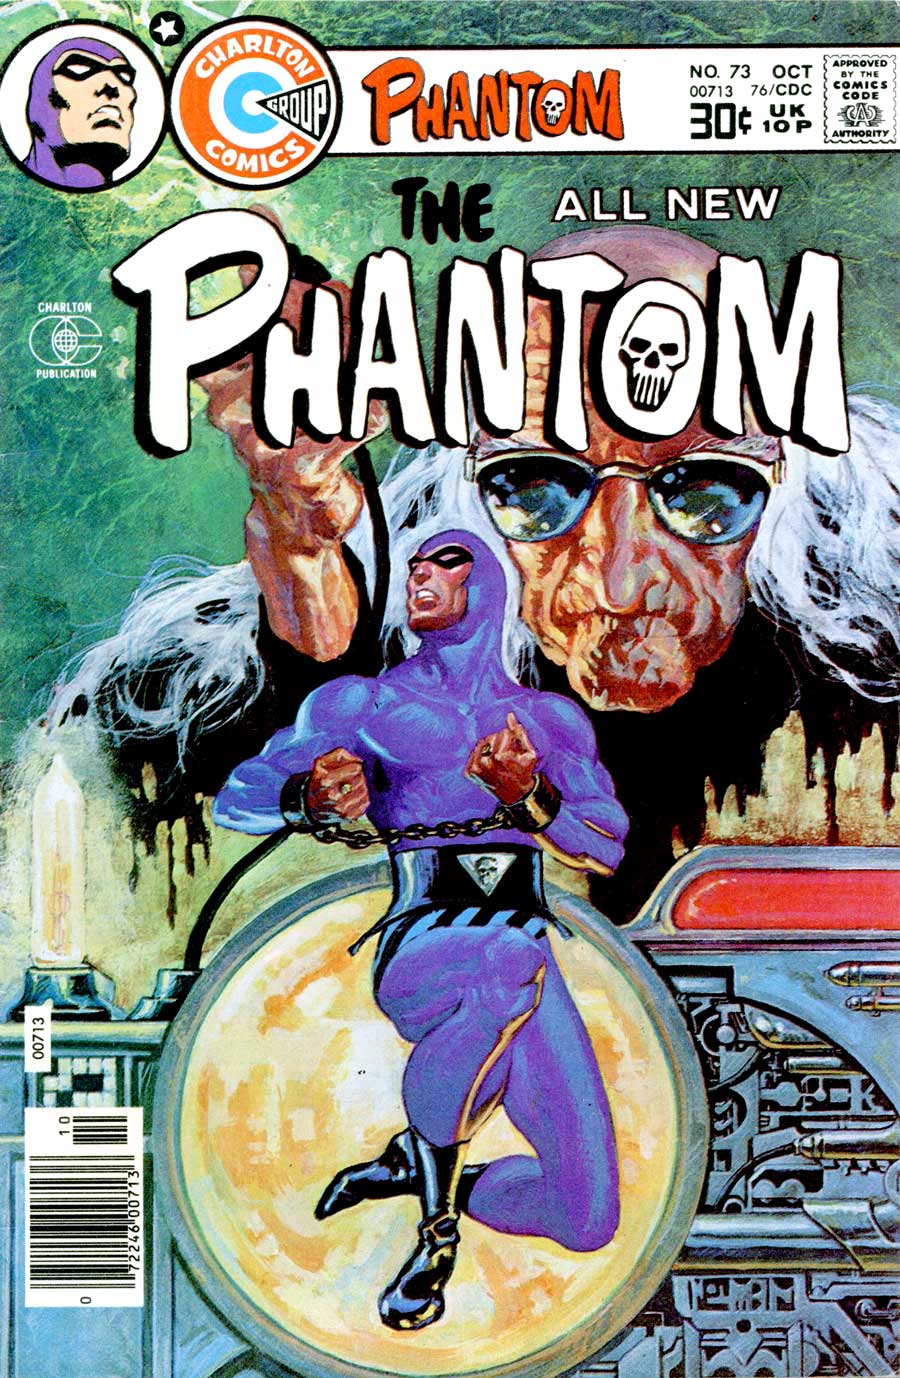 The Phantom v2 #73 charlton comic book cover art by Don Newton